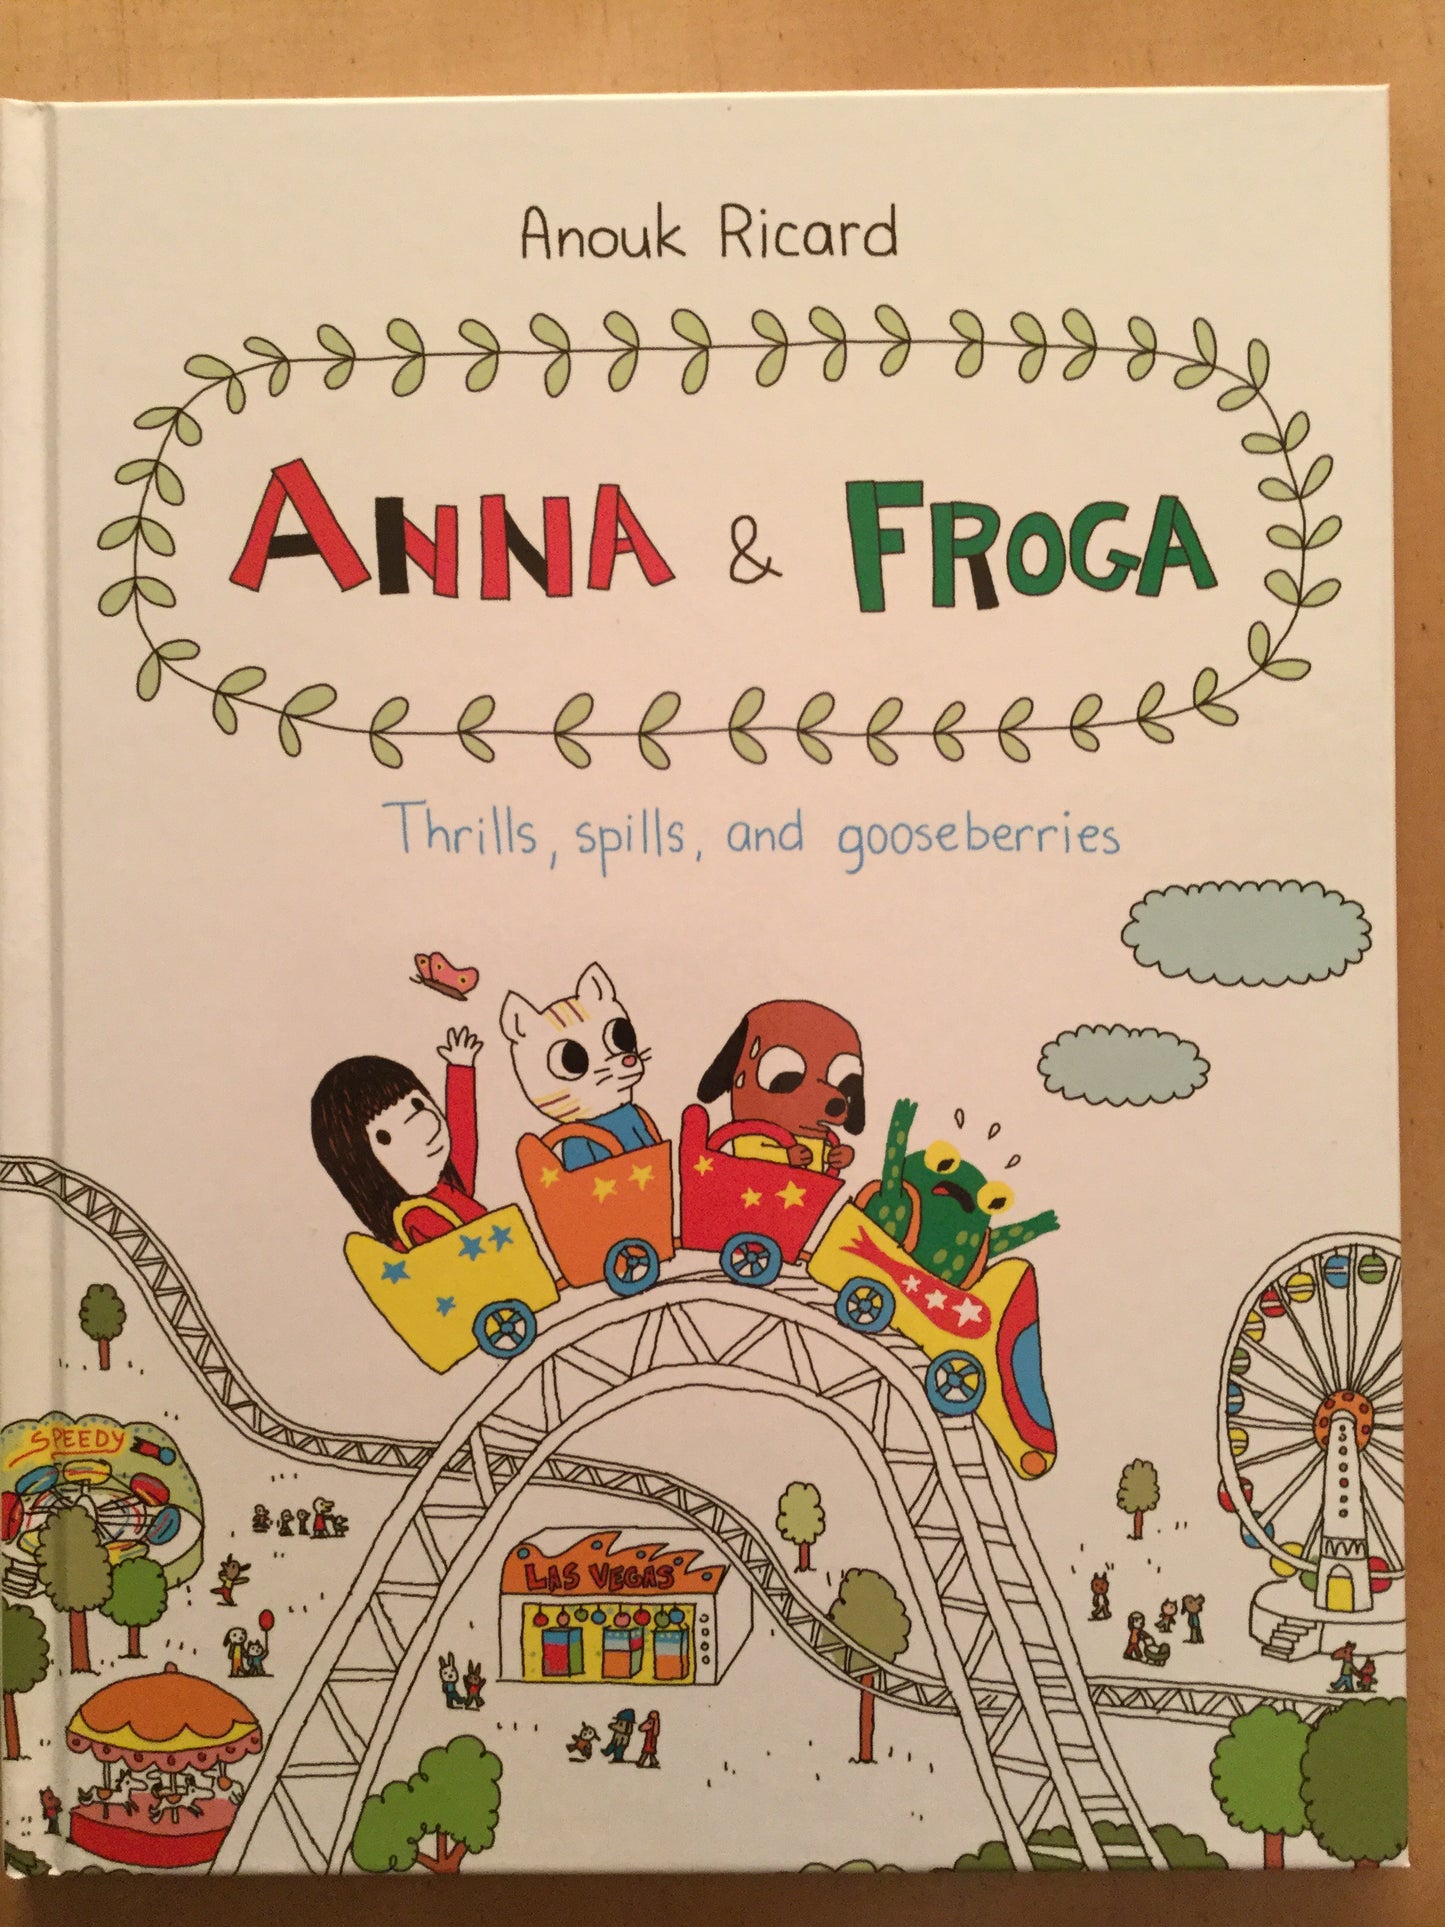 Anna & Froga: Thrills, Spills, and Gooseberries